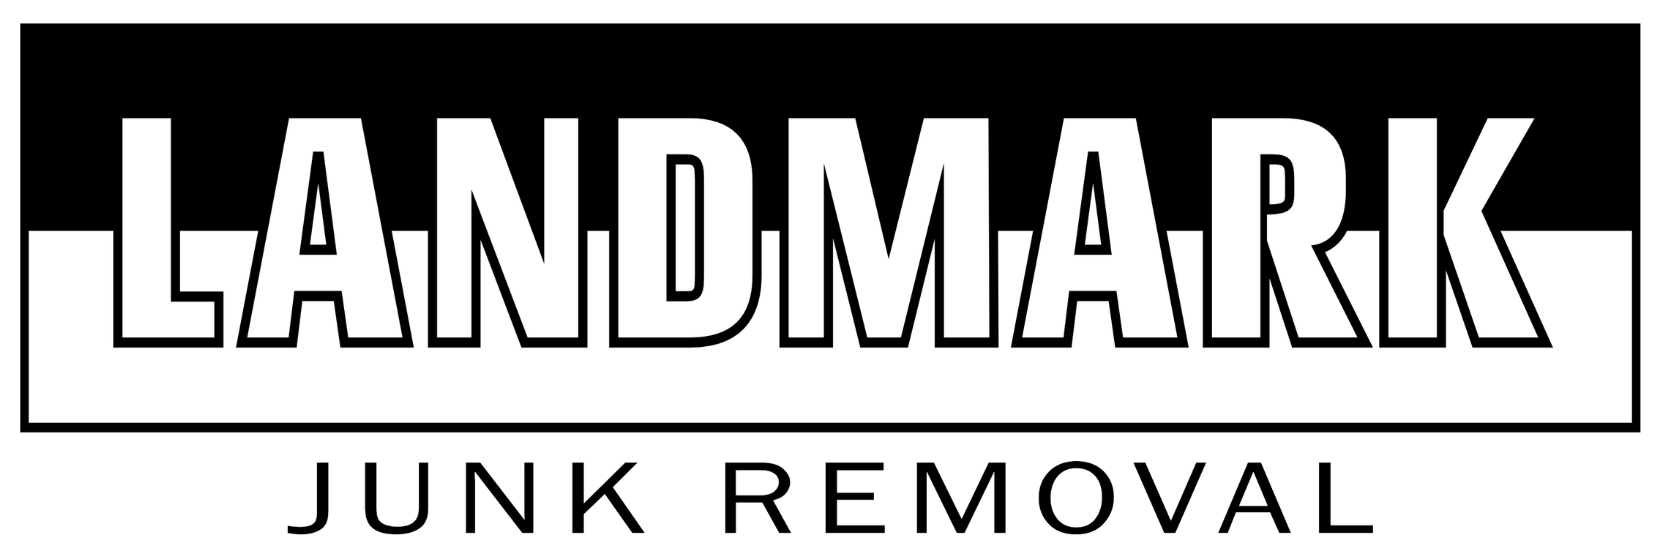 Landmark Junk Removal, LLC Logo